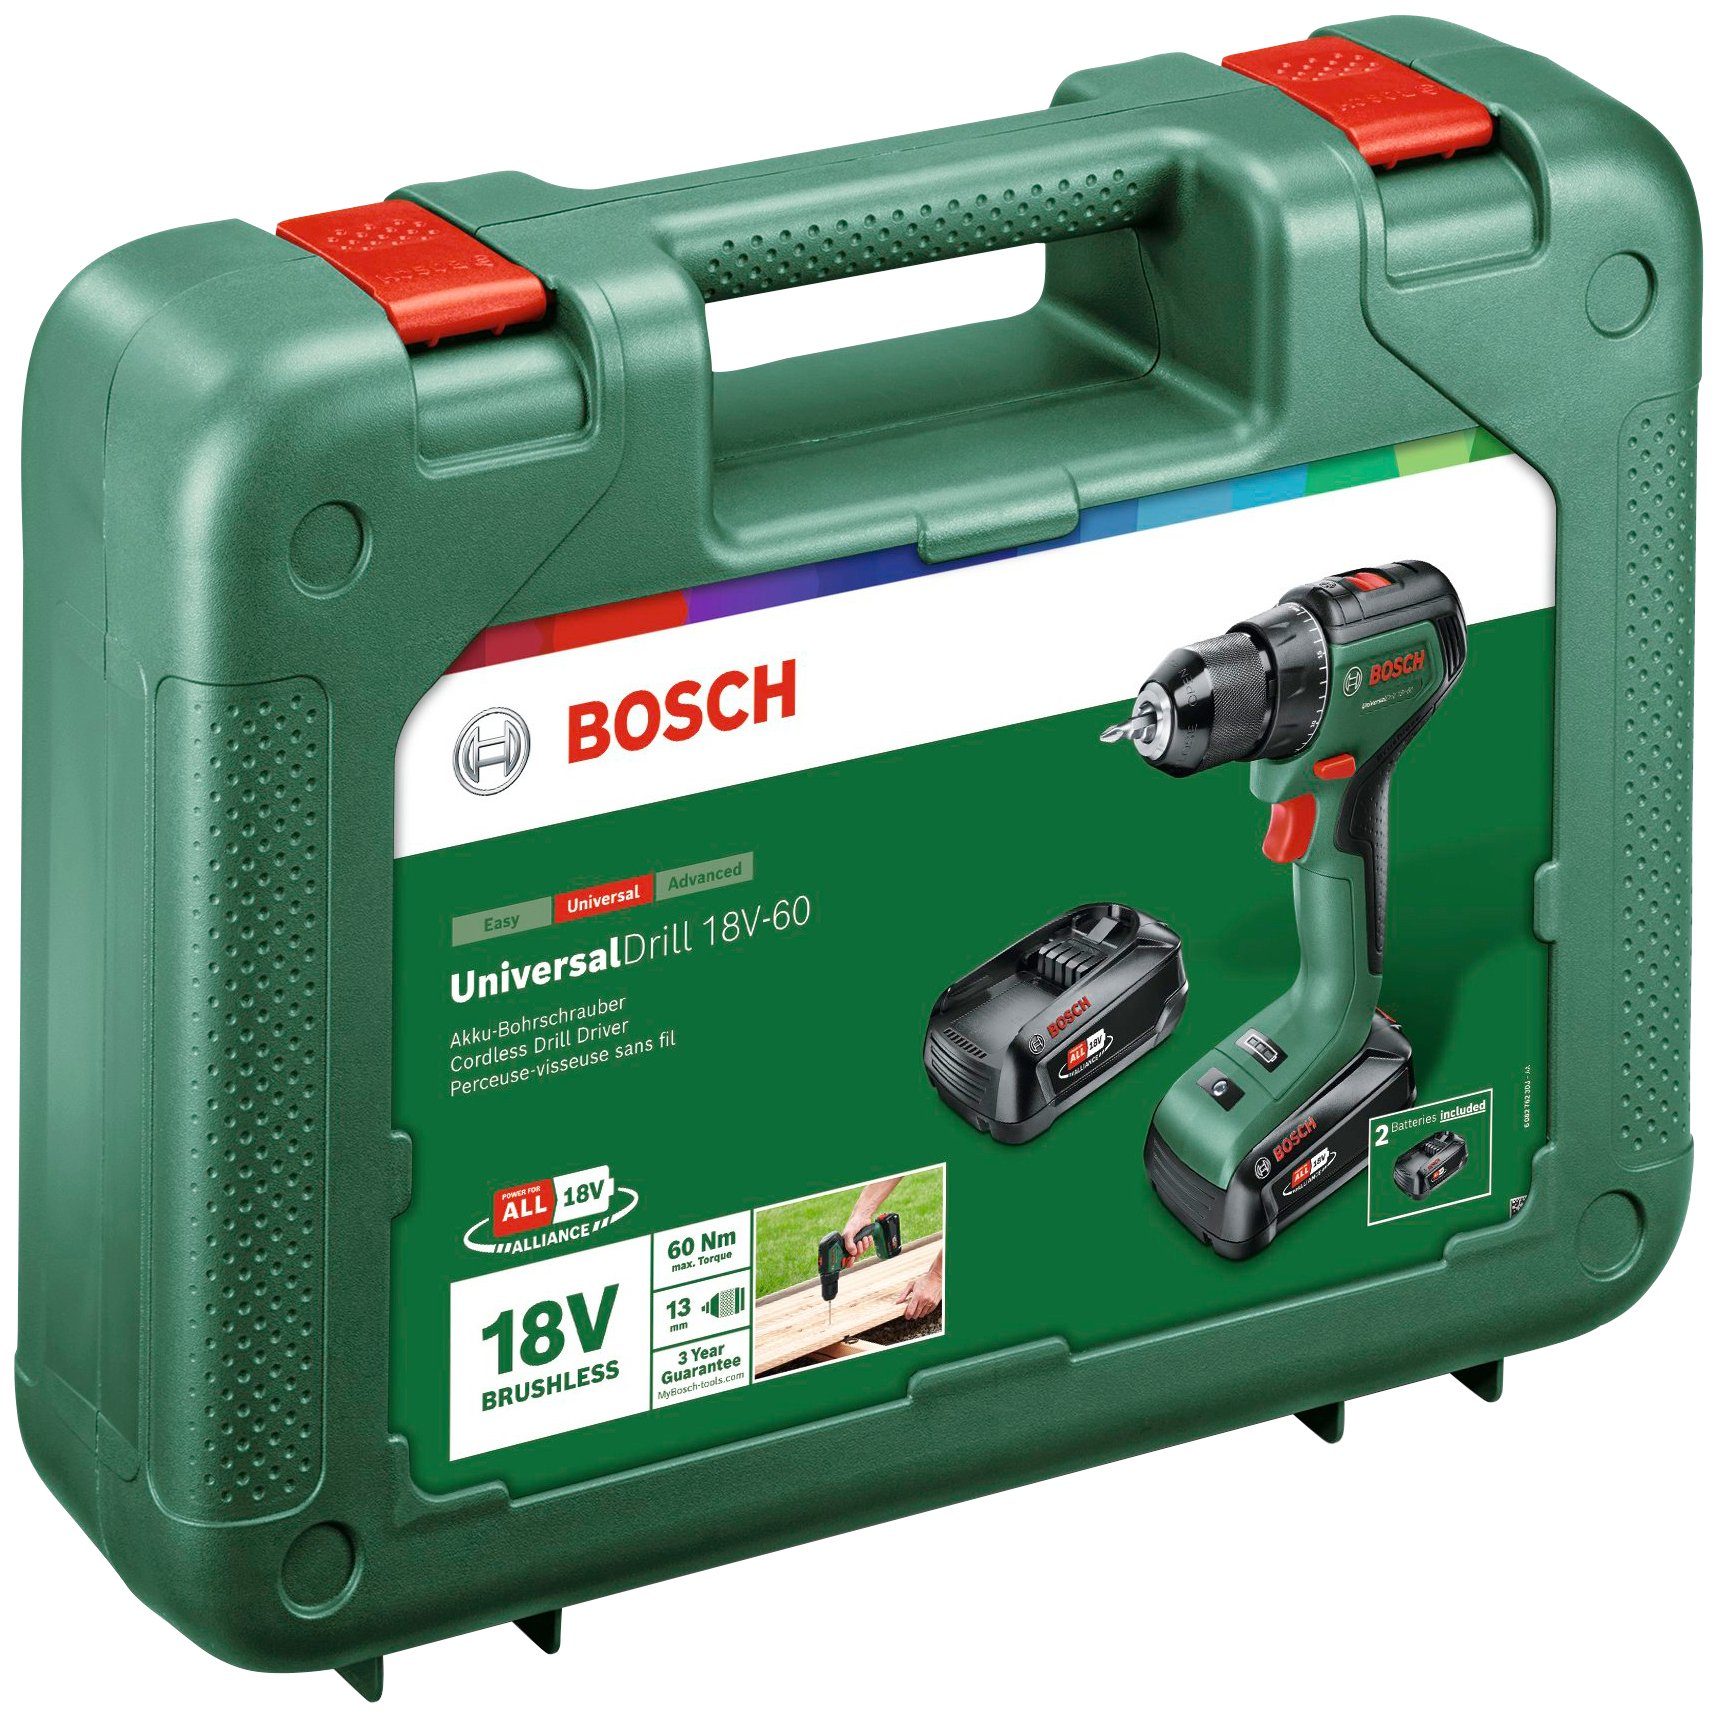 Bosch Home & Koffer, Akku-Bohrschrauber Garden 18V-60, Ladegerät mit und Akkus UniversalDrill 18V/2Ah 2 Inkl